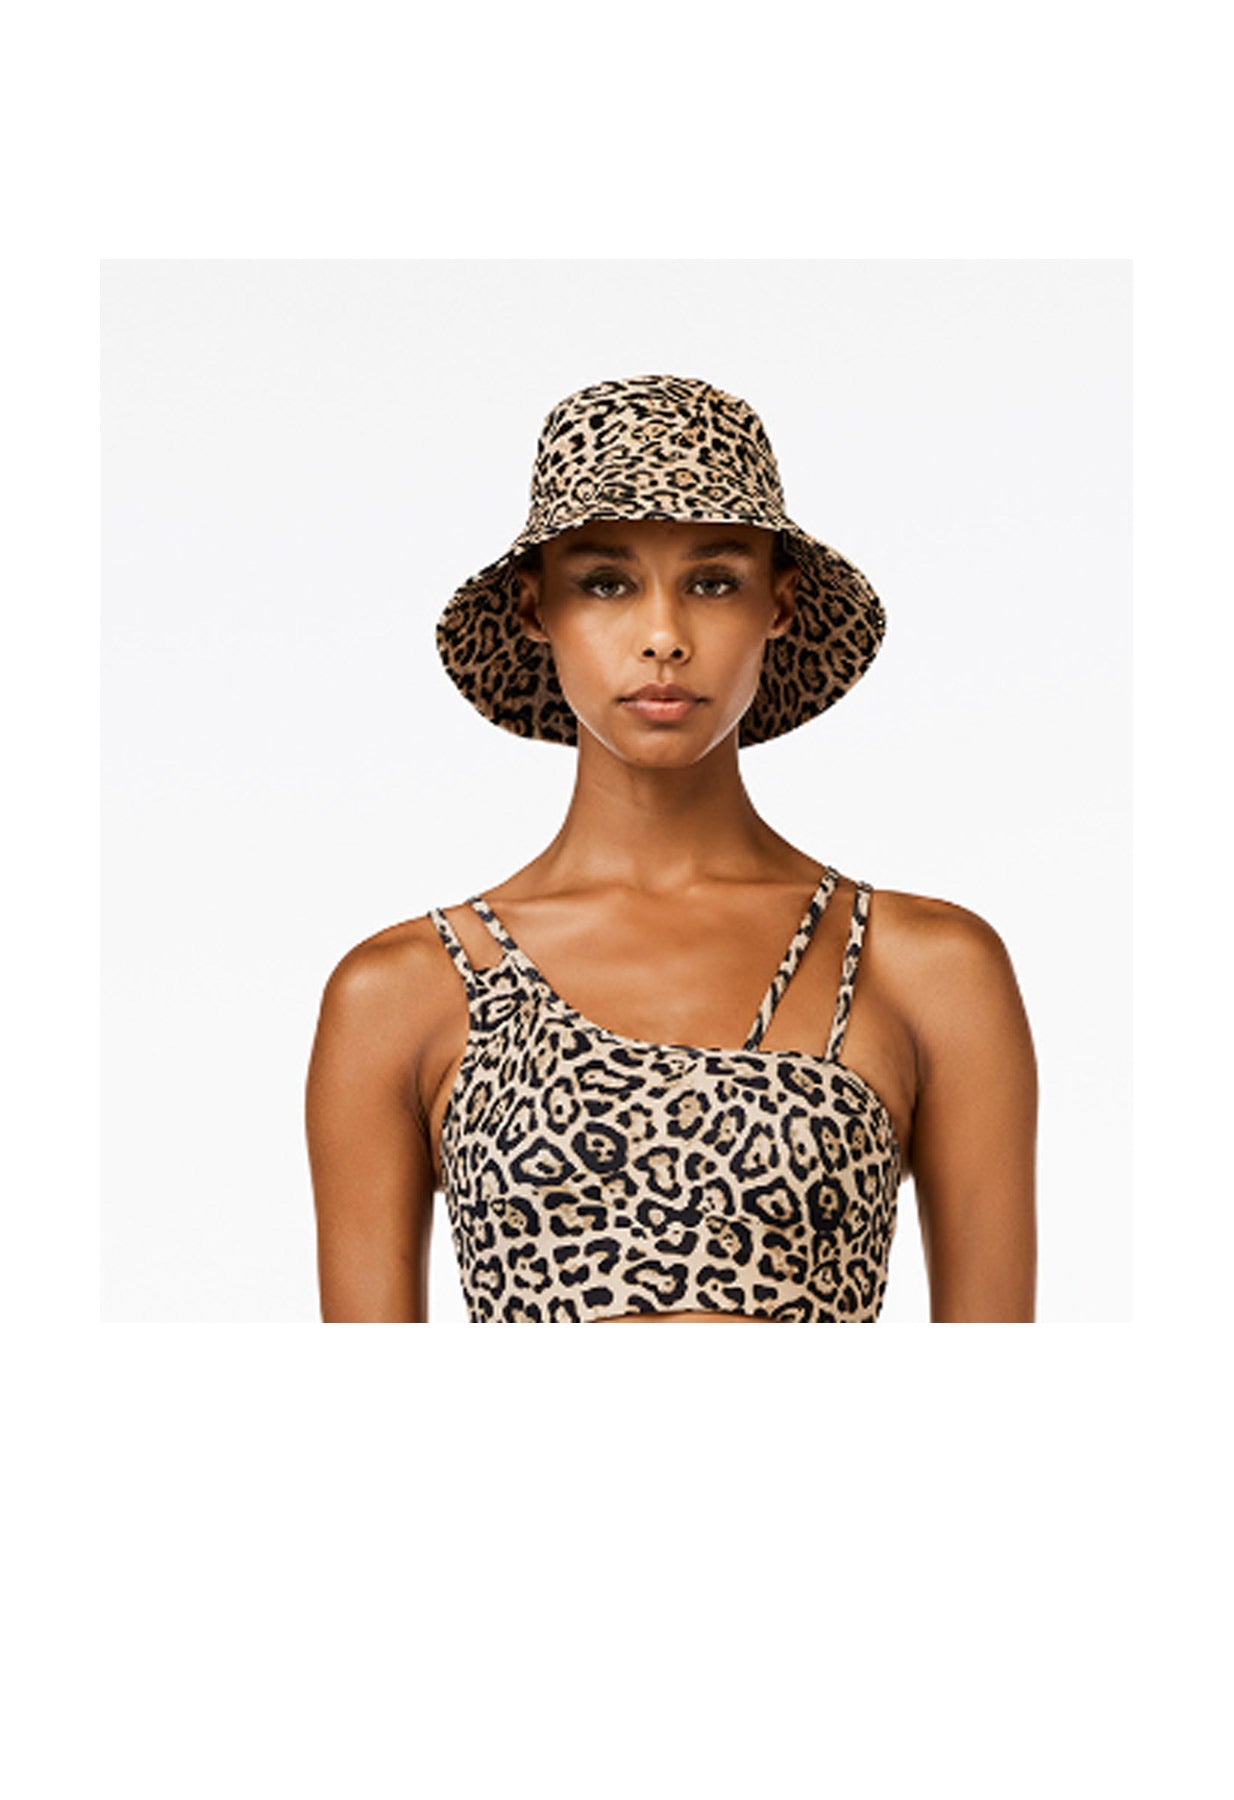 Goldbergh Beach Bucket Hat in Jaguar Print